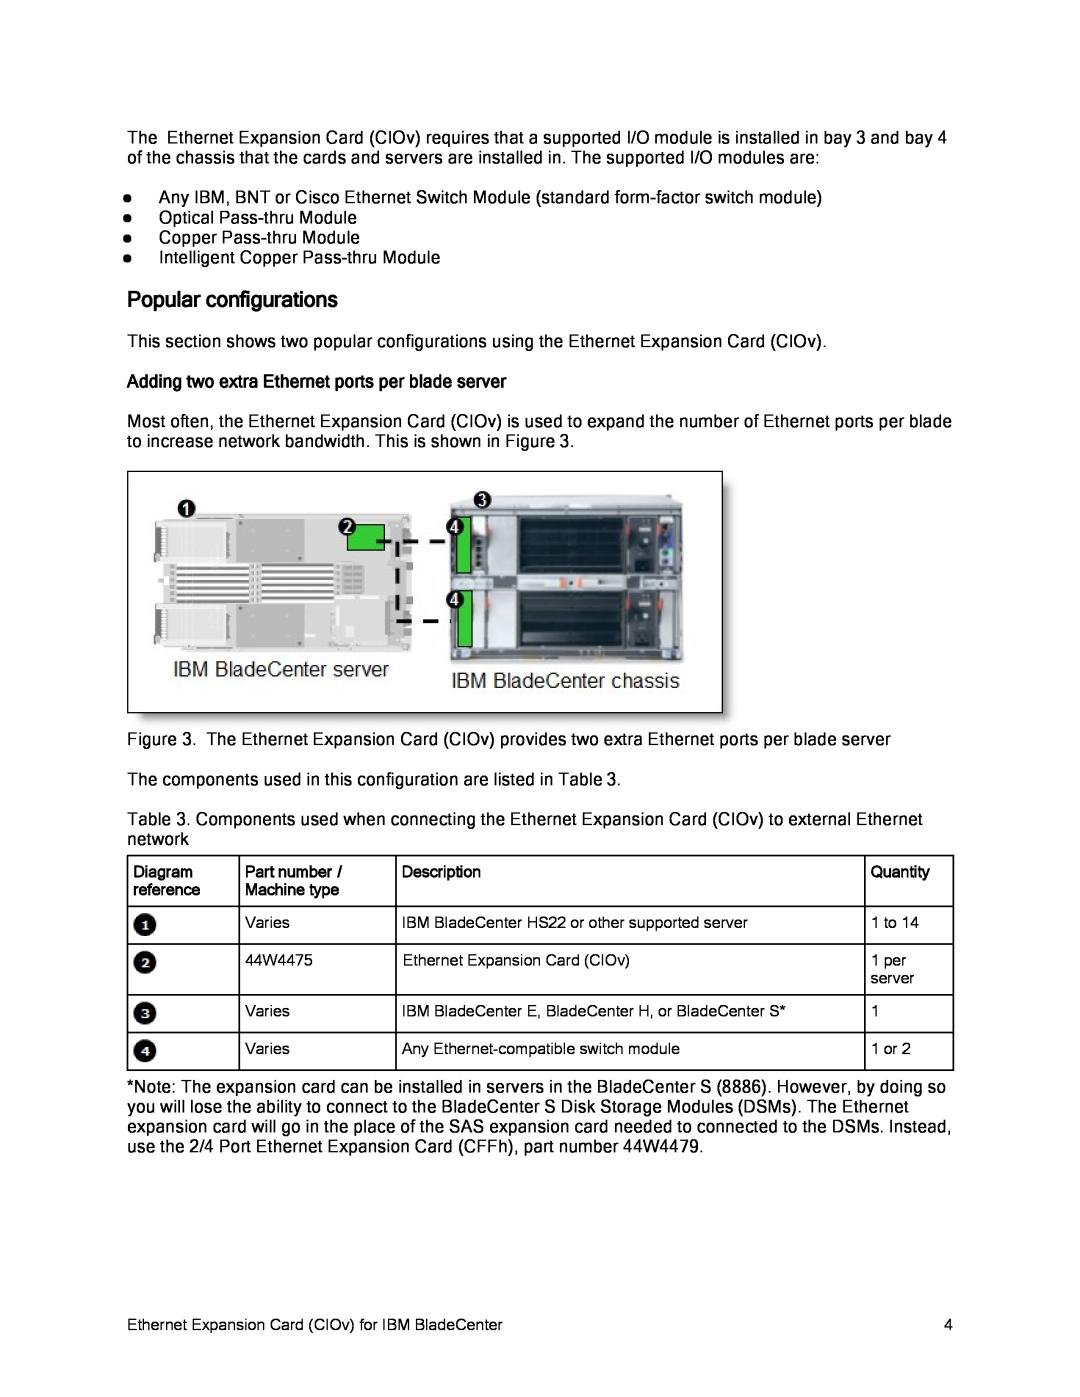 IBM CIOv manual Popular configurations, Adding two extra Ethernet ports per blade server 